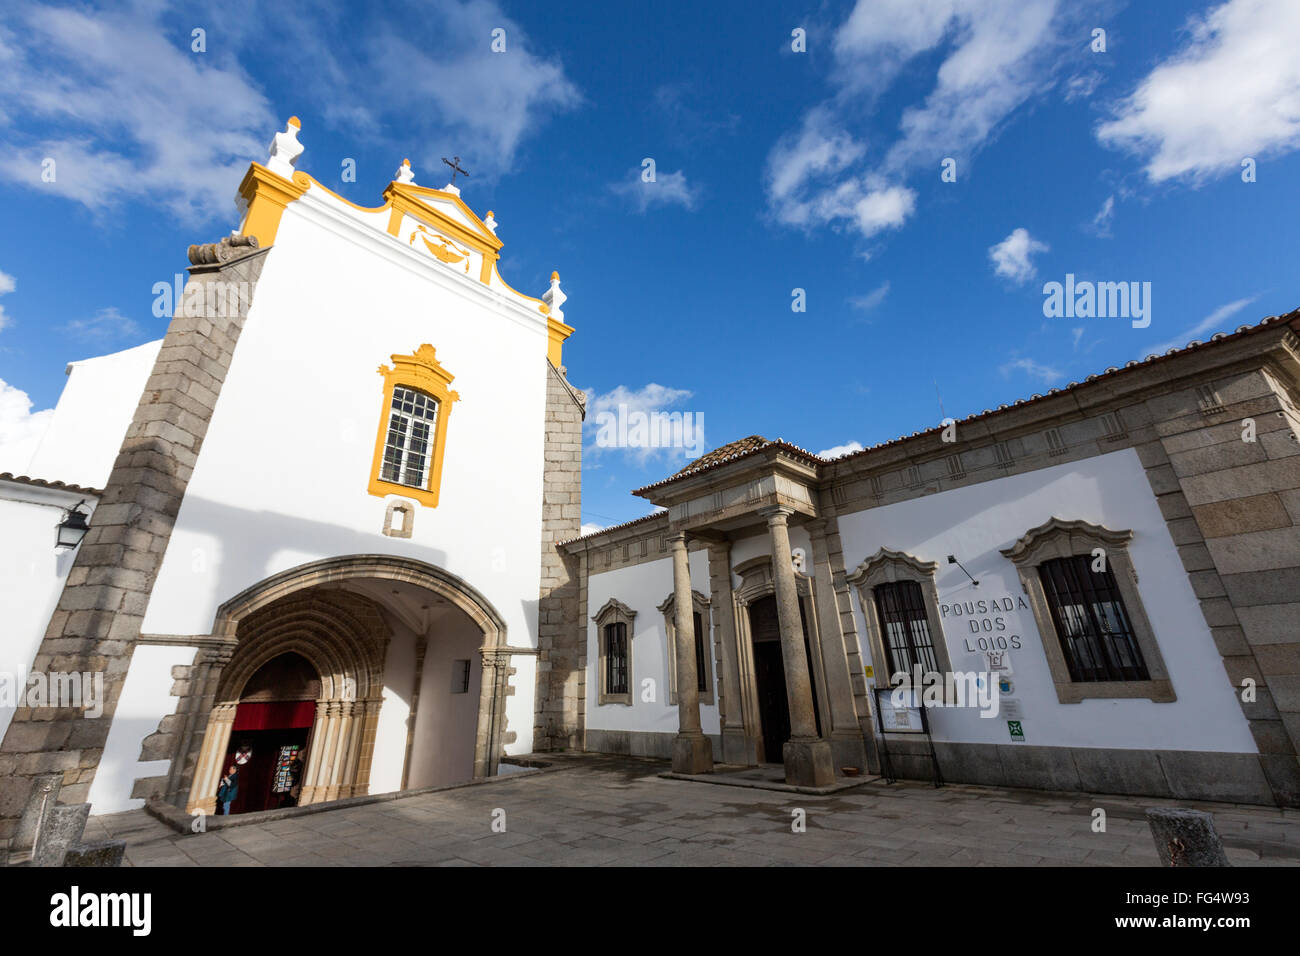 Convent And Pousada Dos Loios In Evora Portugal Stock Photo